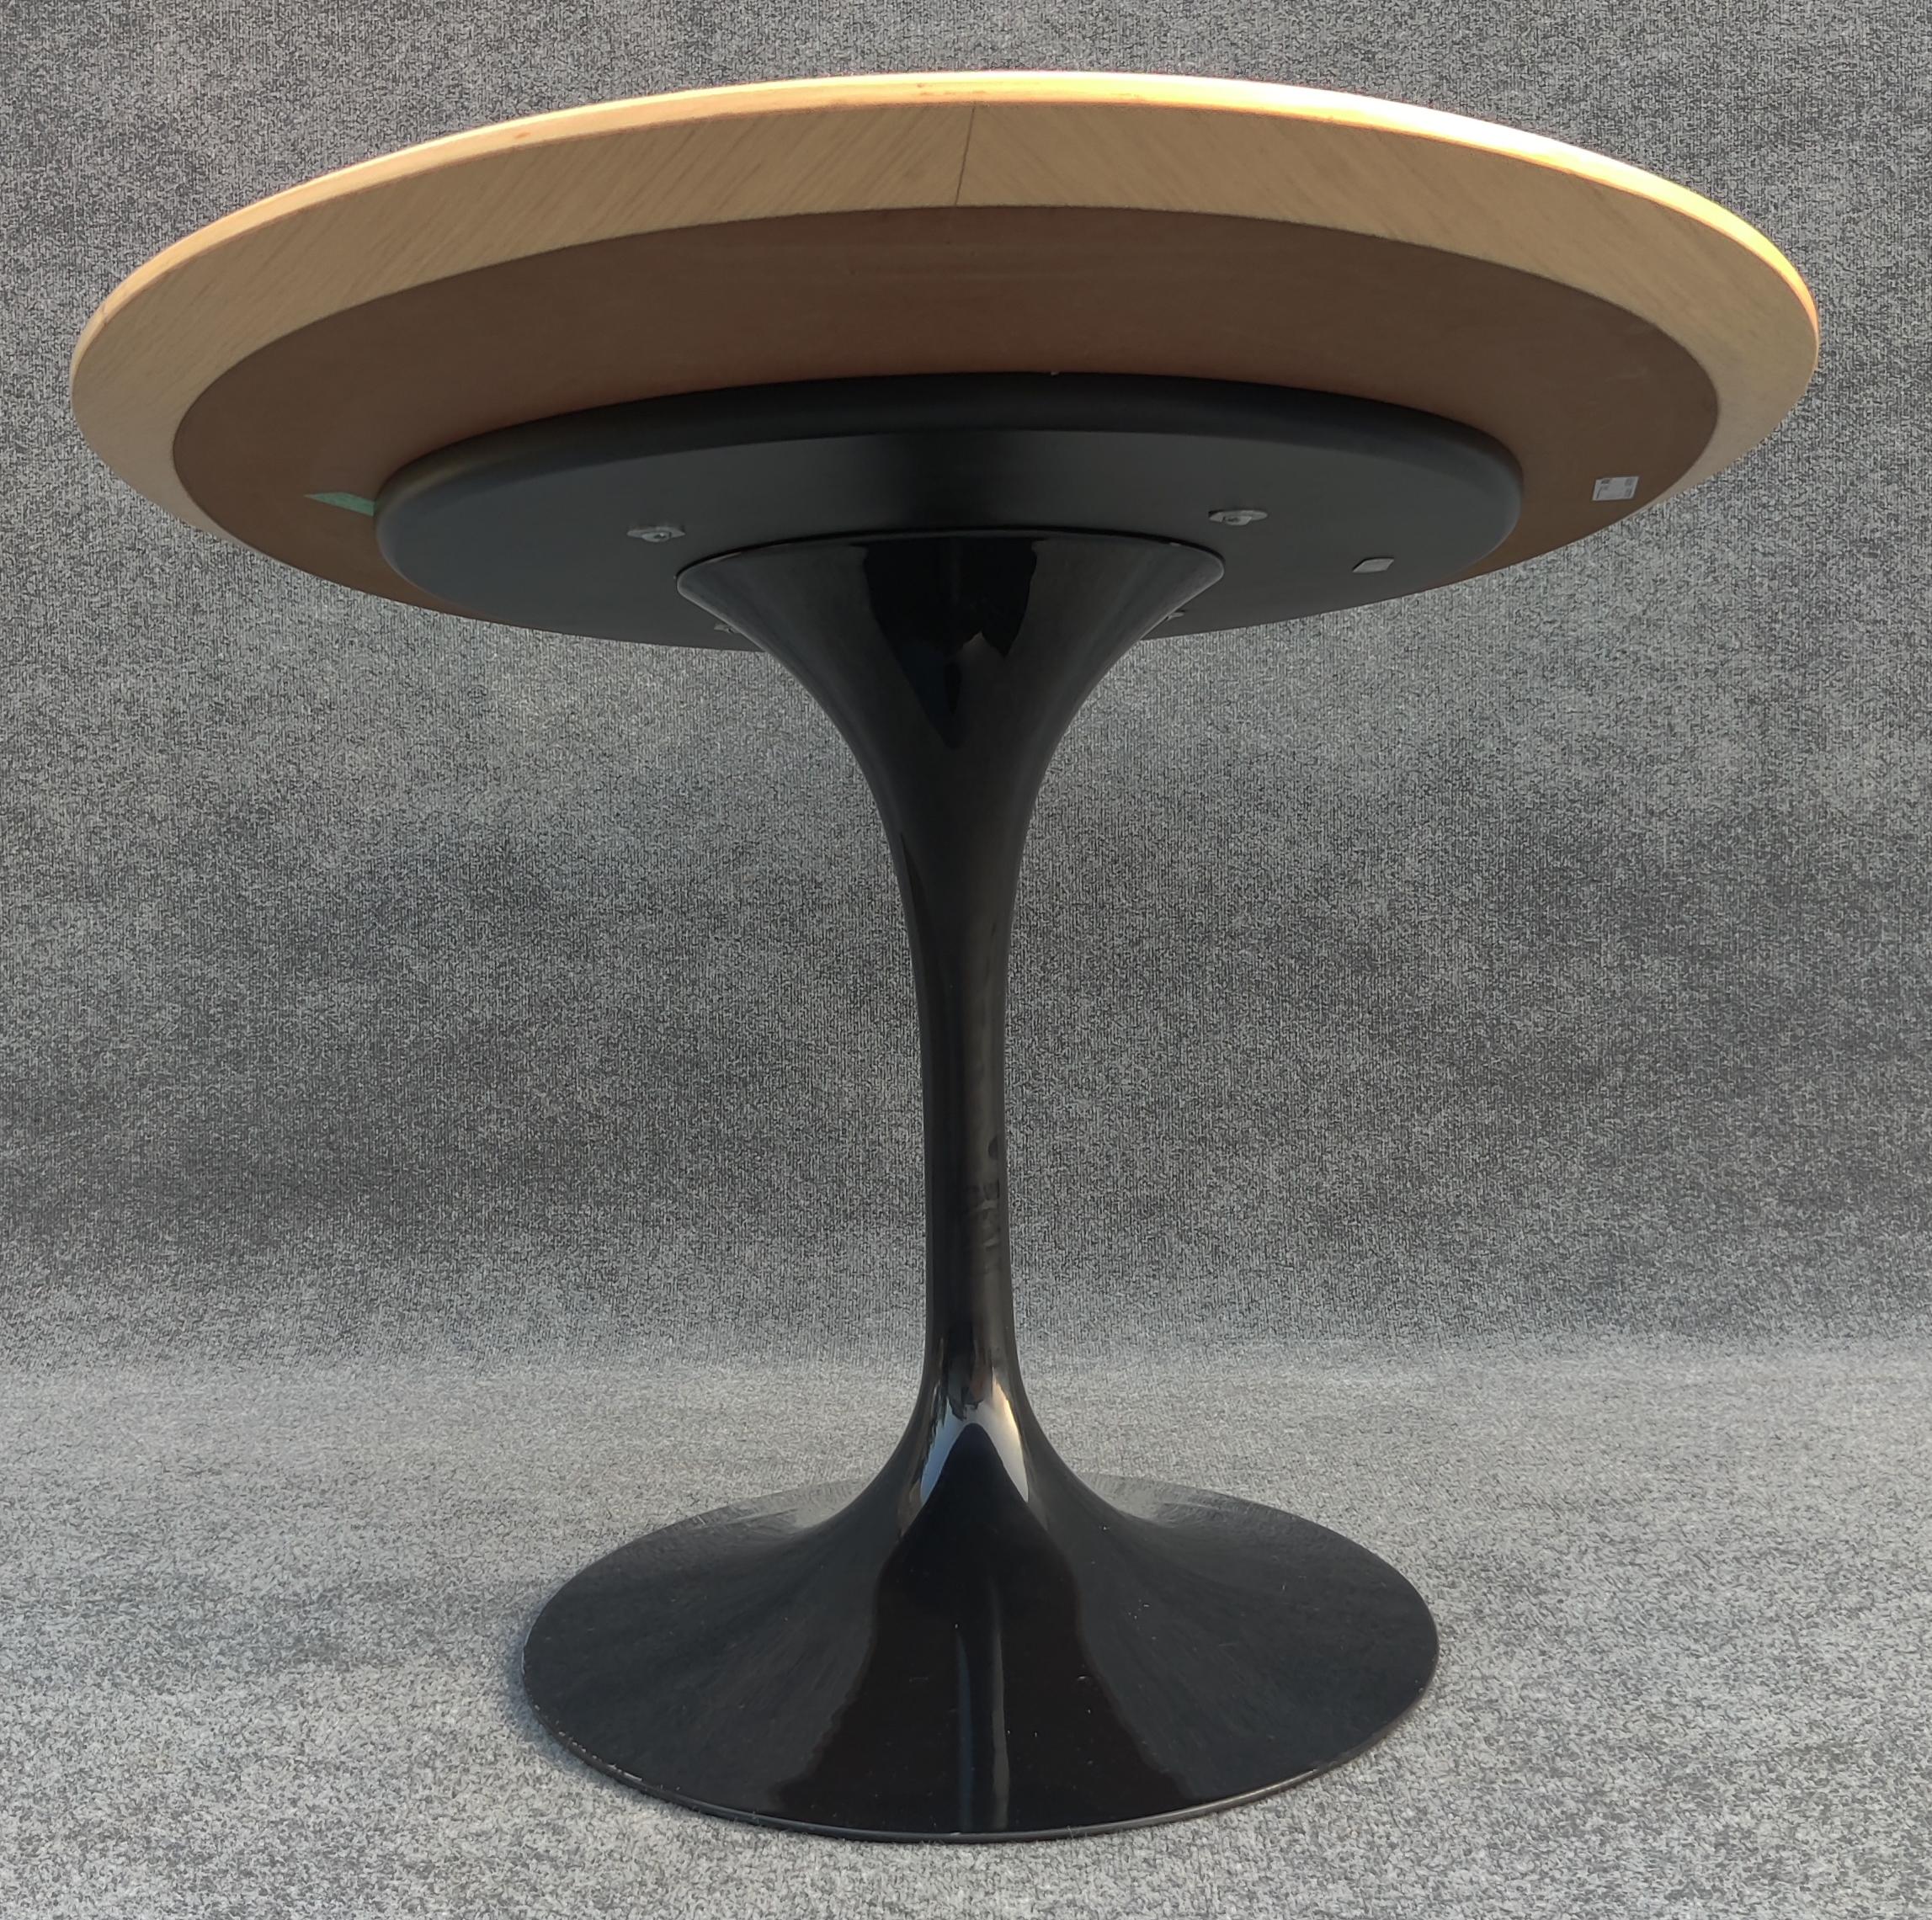 Aluminum Eero Saarinen Knoll Oval Tulip Dining Table 66x38